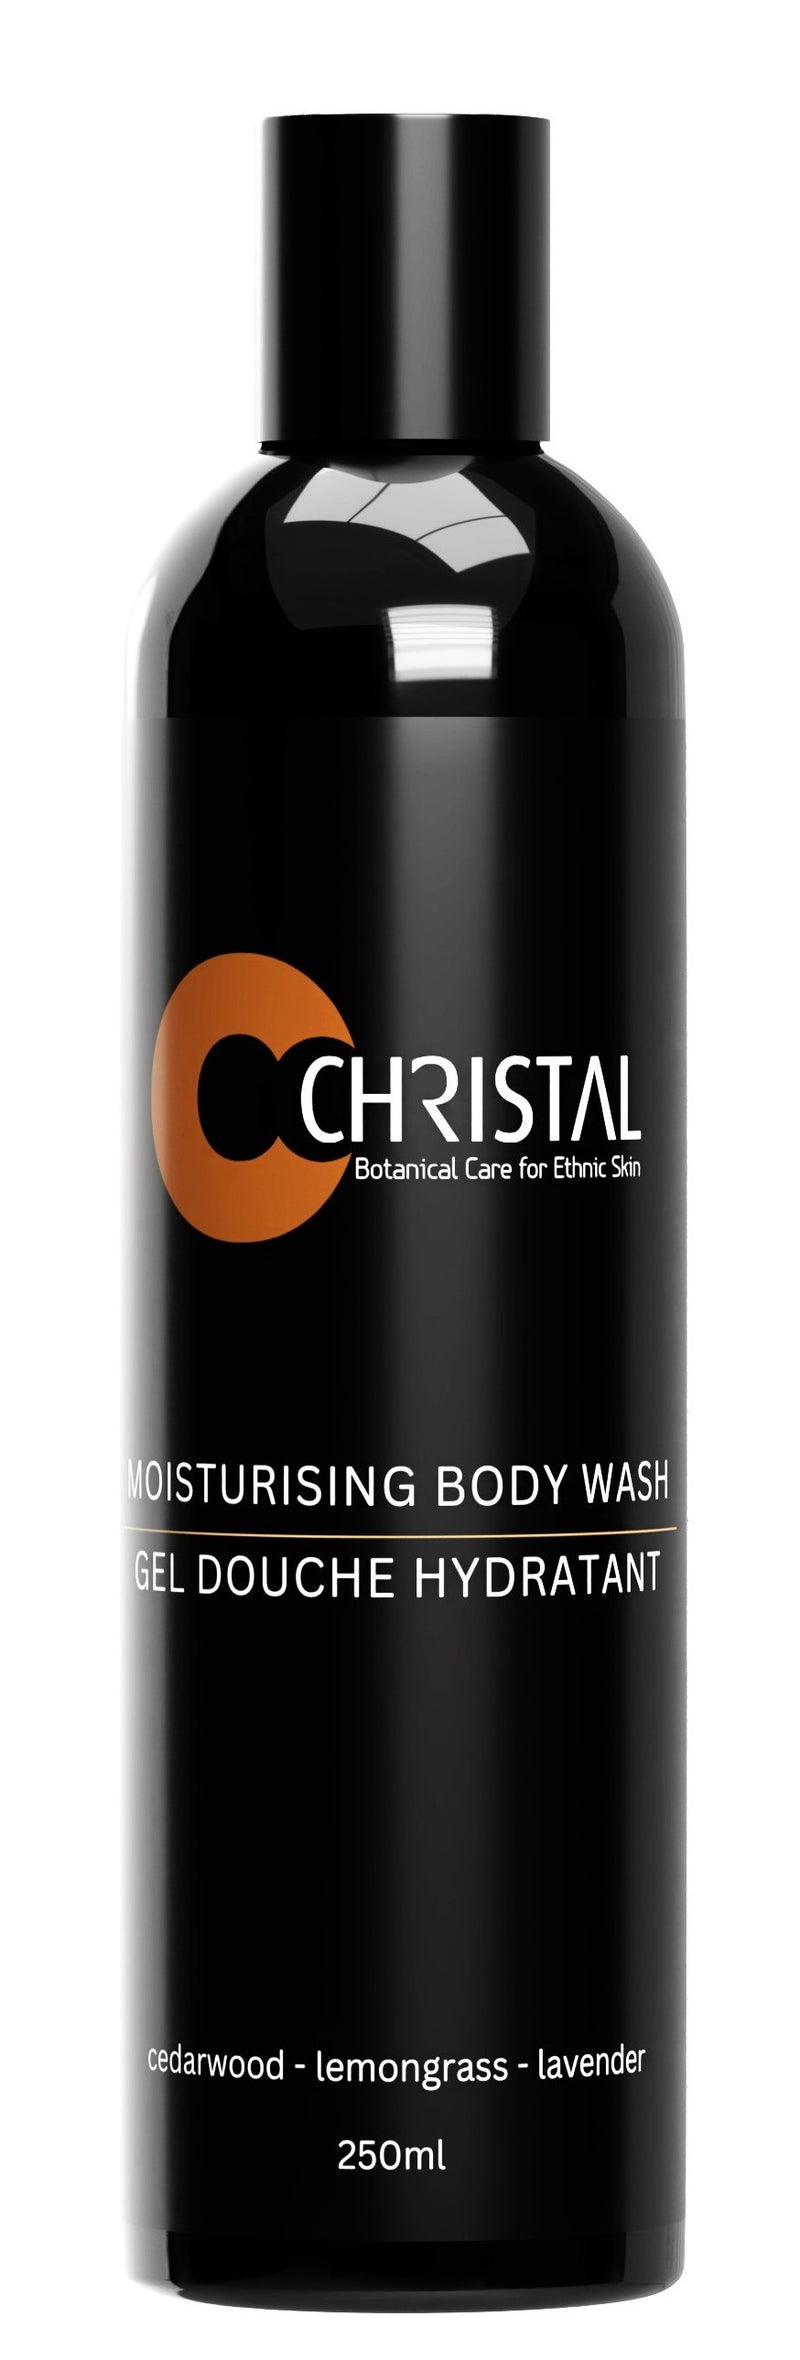 Moisturising Body Wash